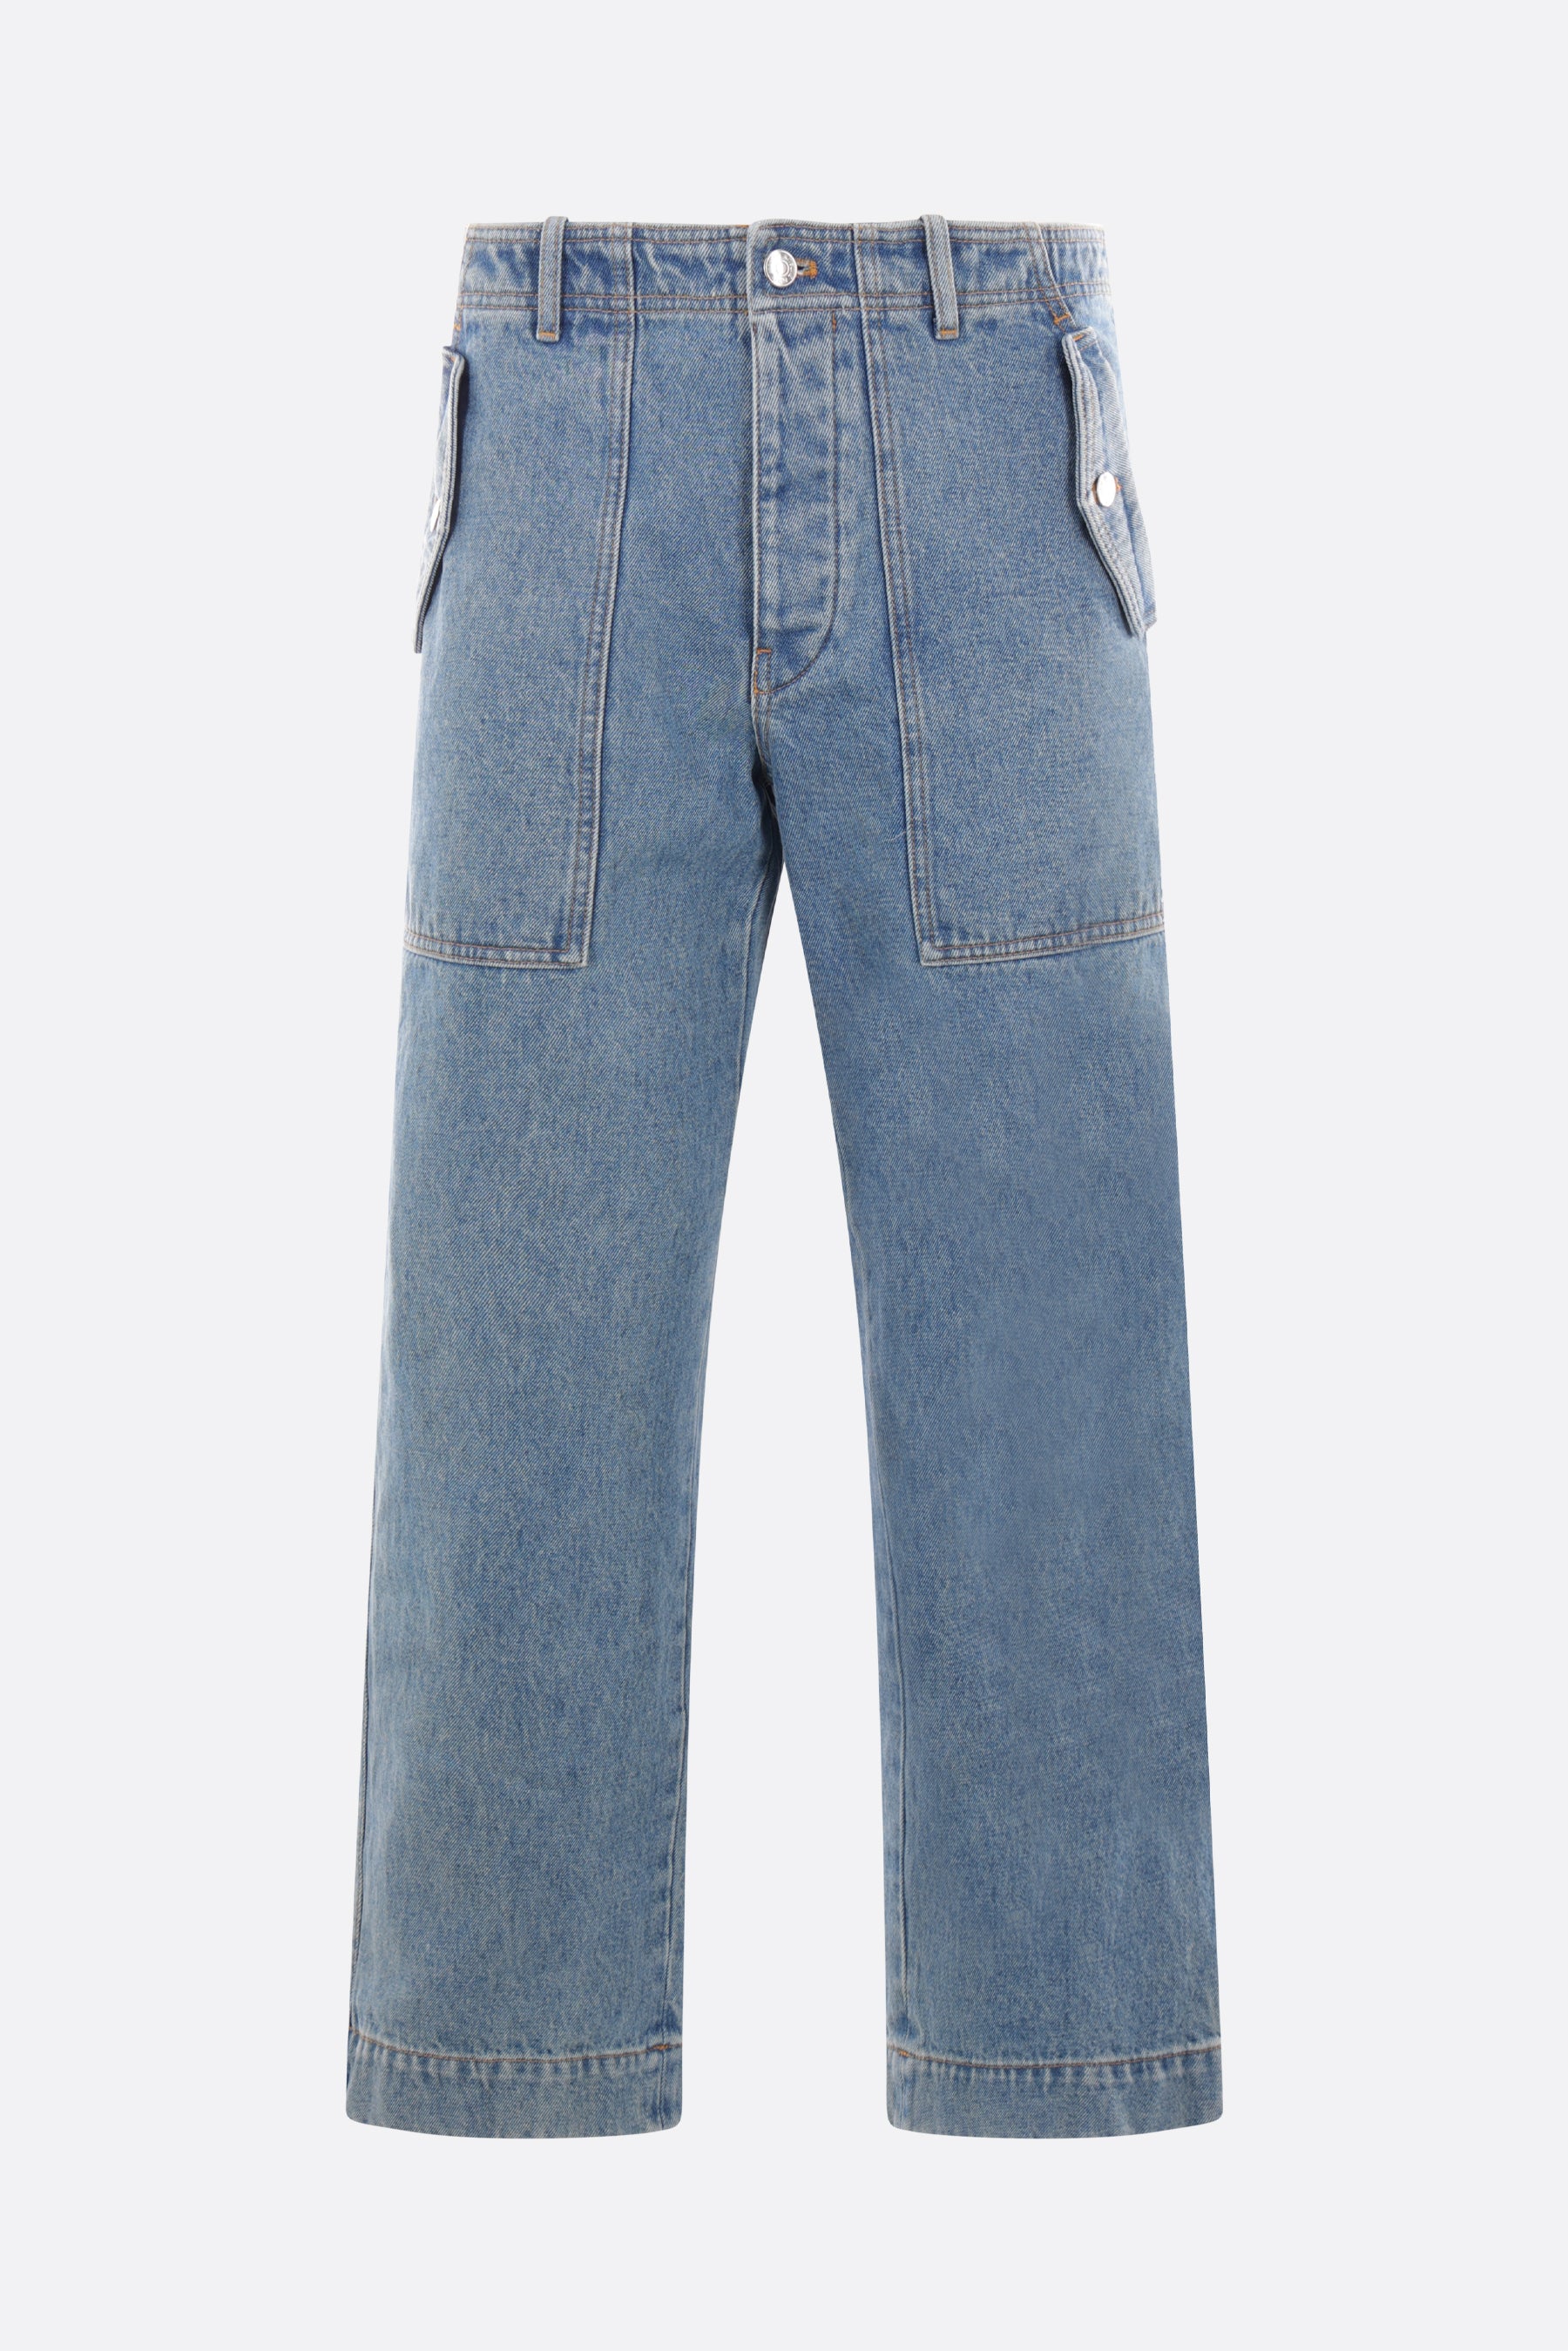 denim workwear jeans – 10corsocomo